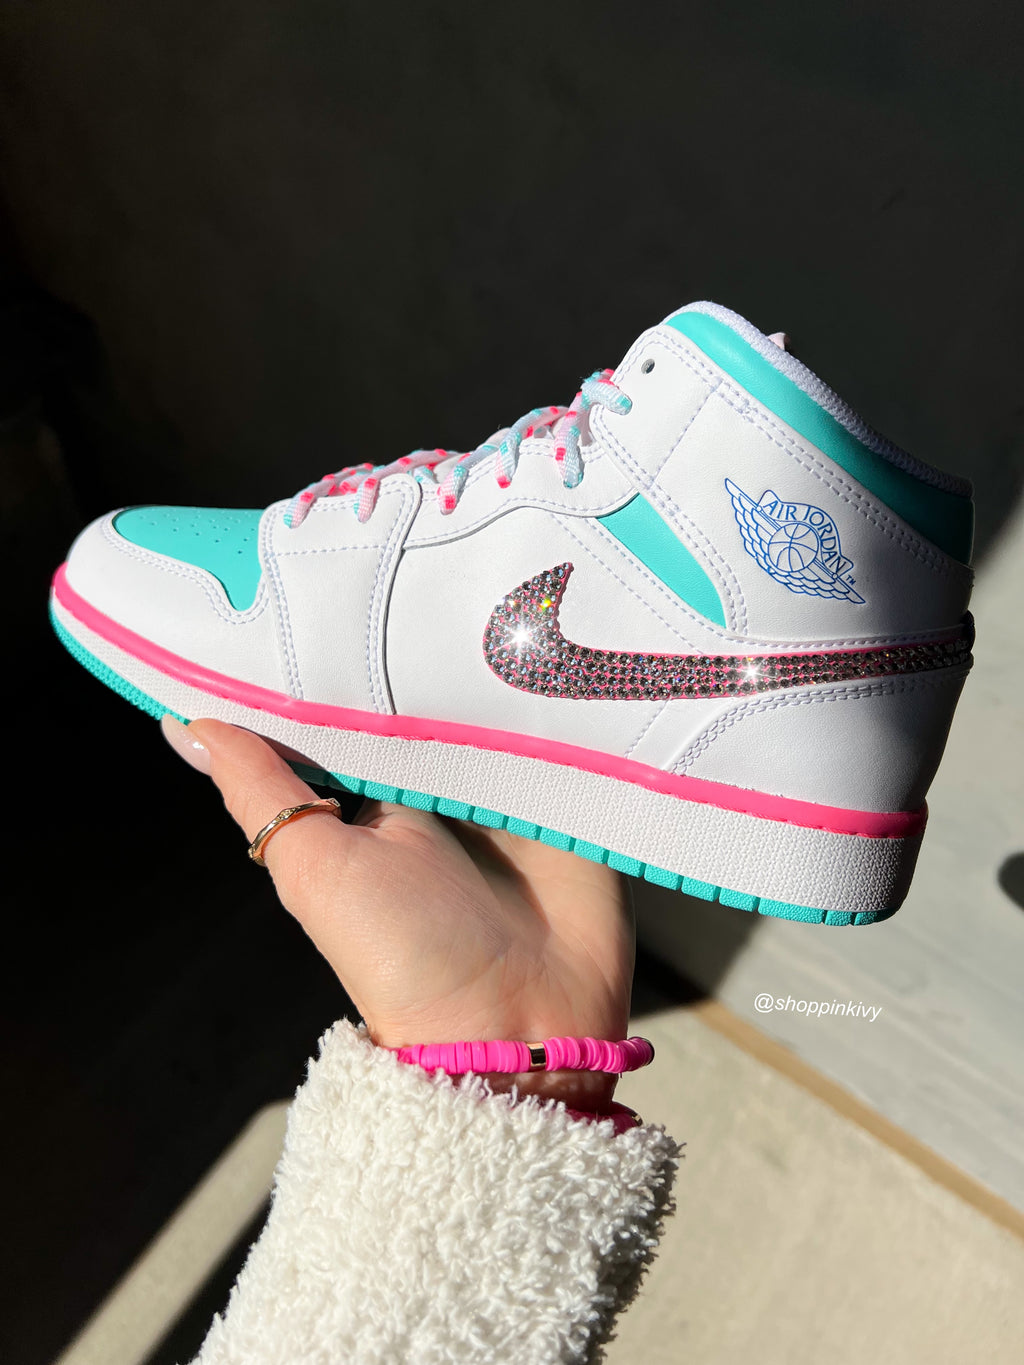 Cotton Candy Swarovski Women’s Air Jordan 1 Mid Shoes